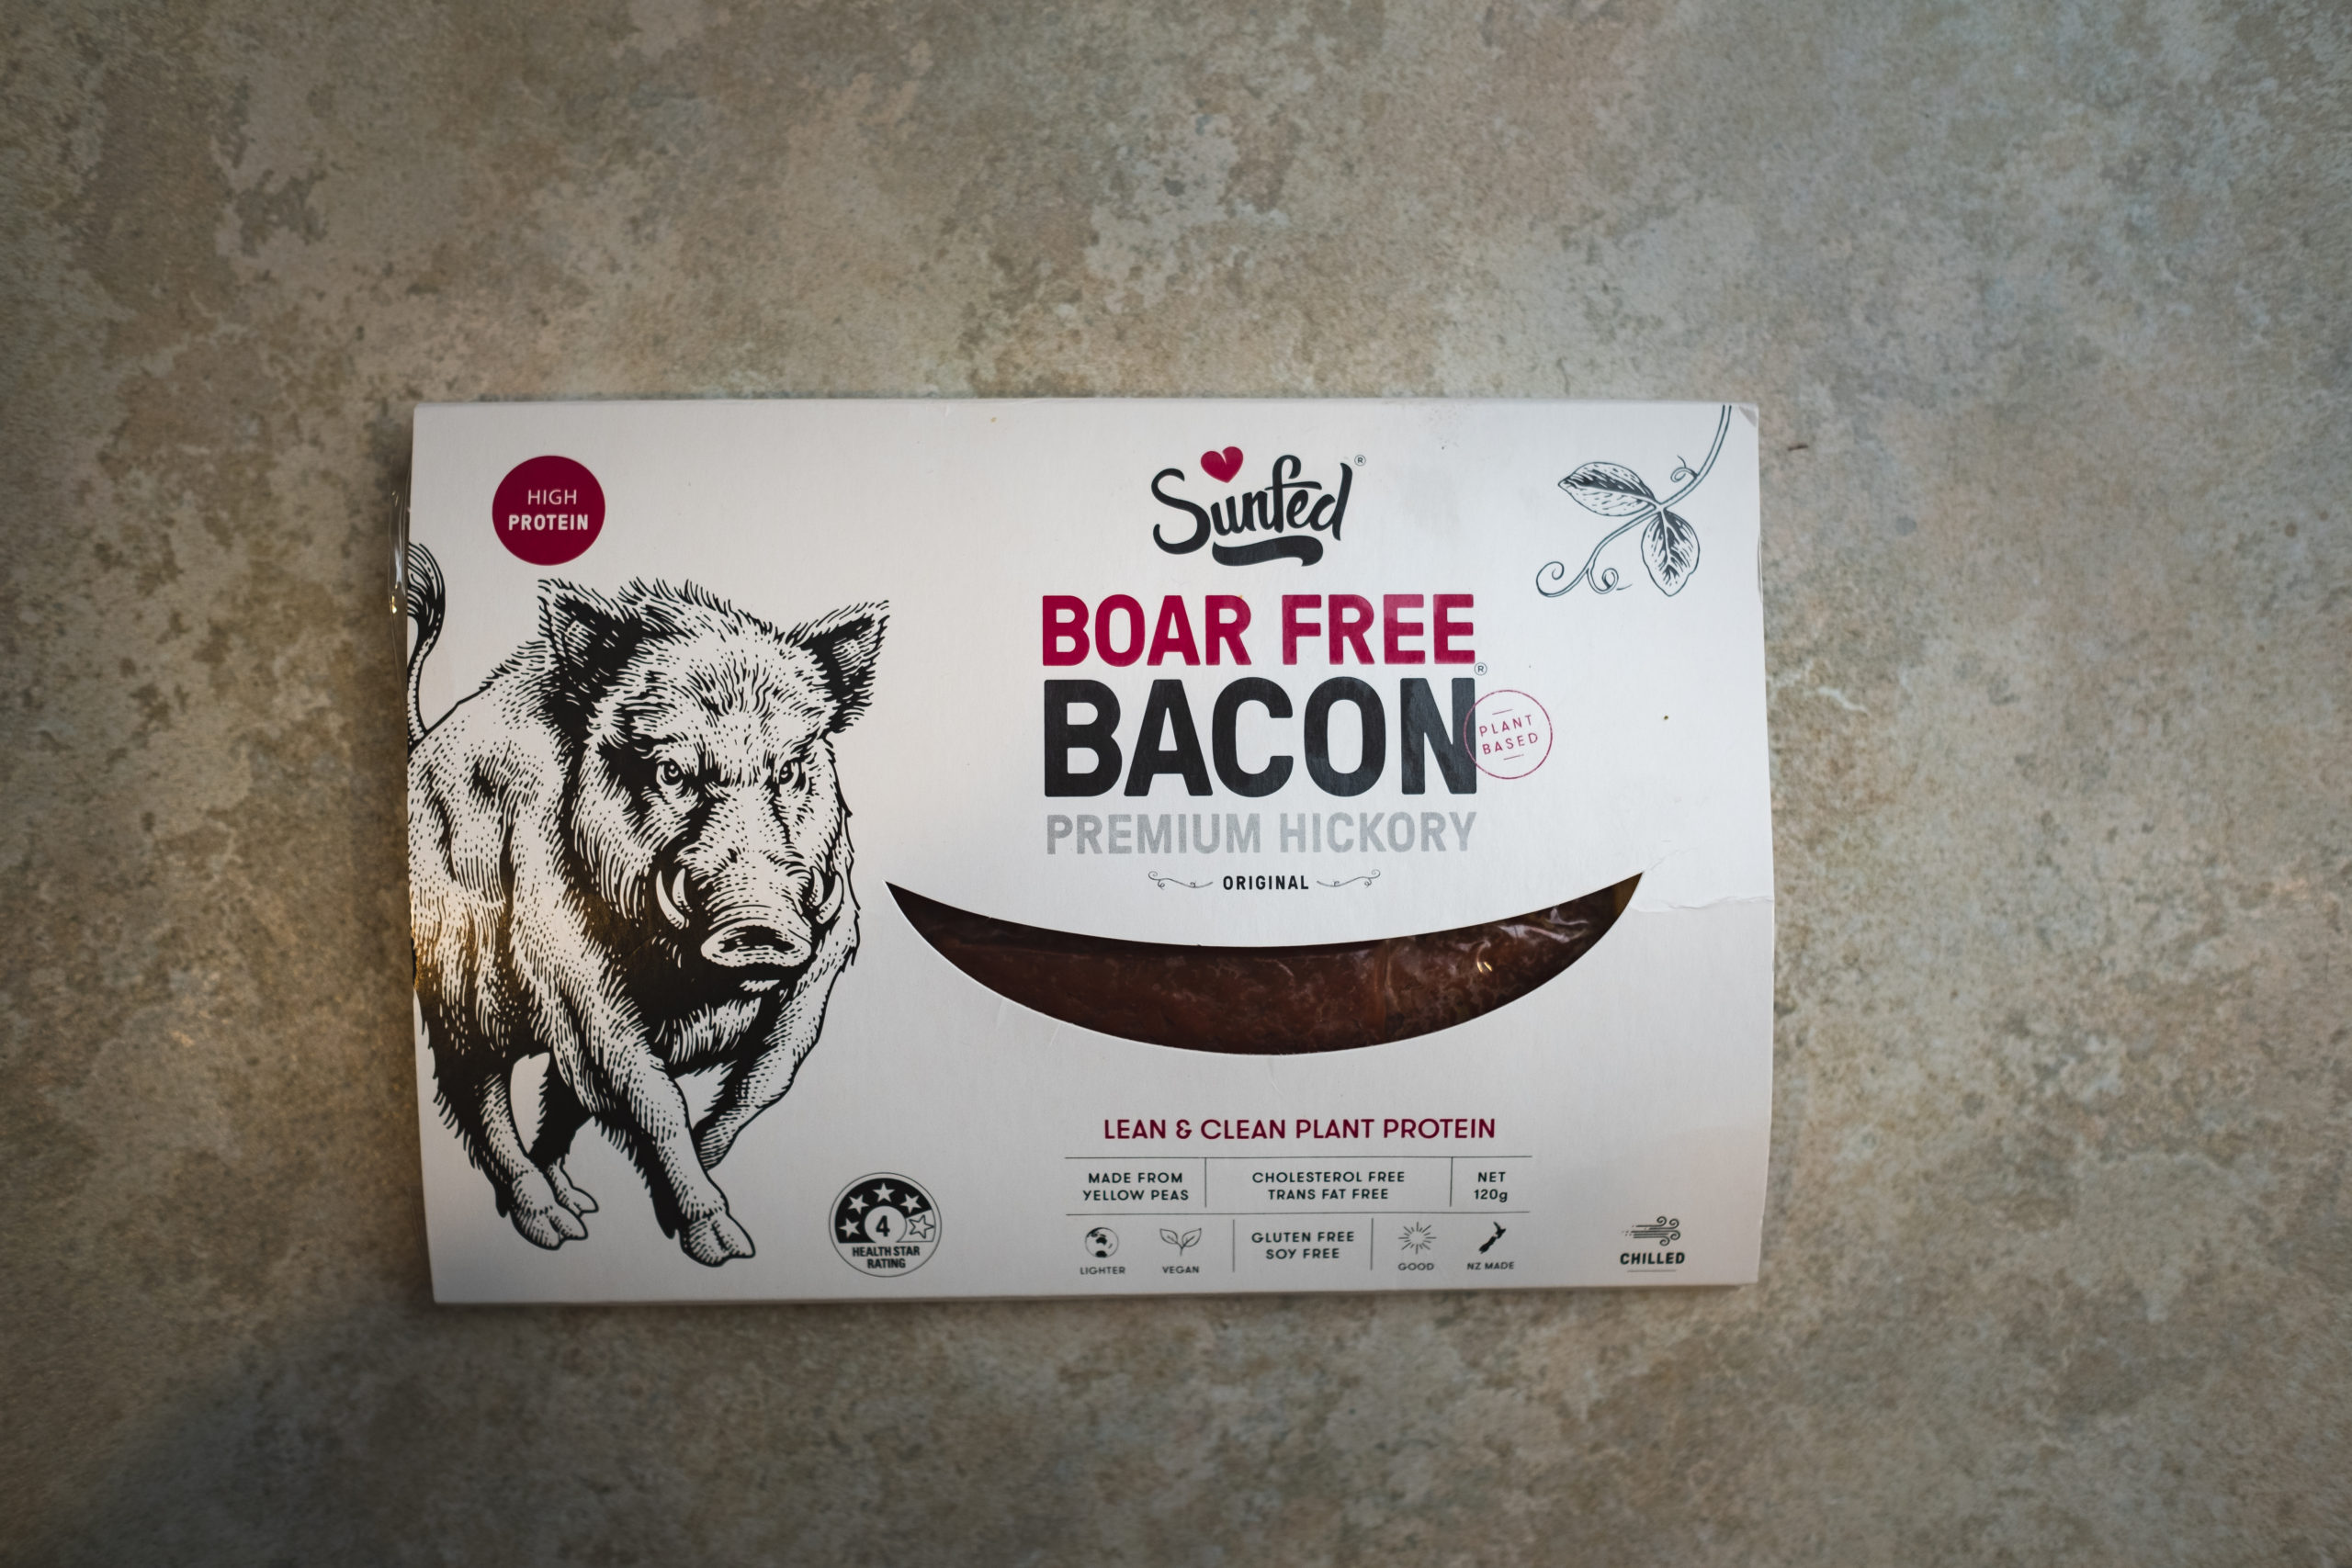 Sunfed Boar-Free Bacon